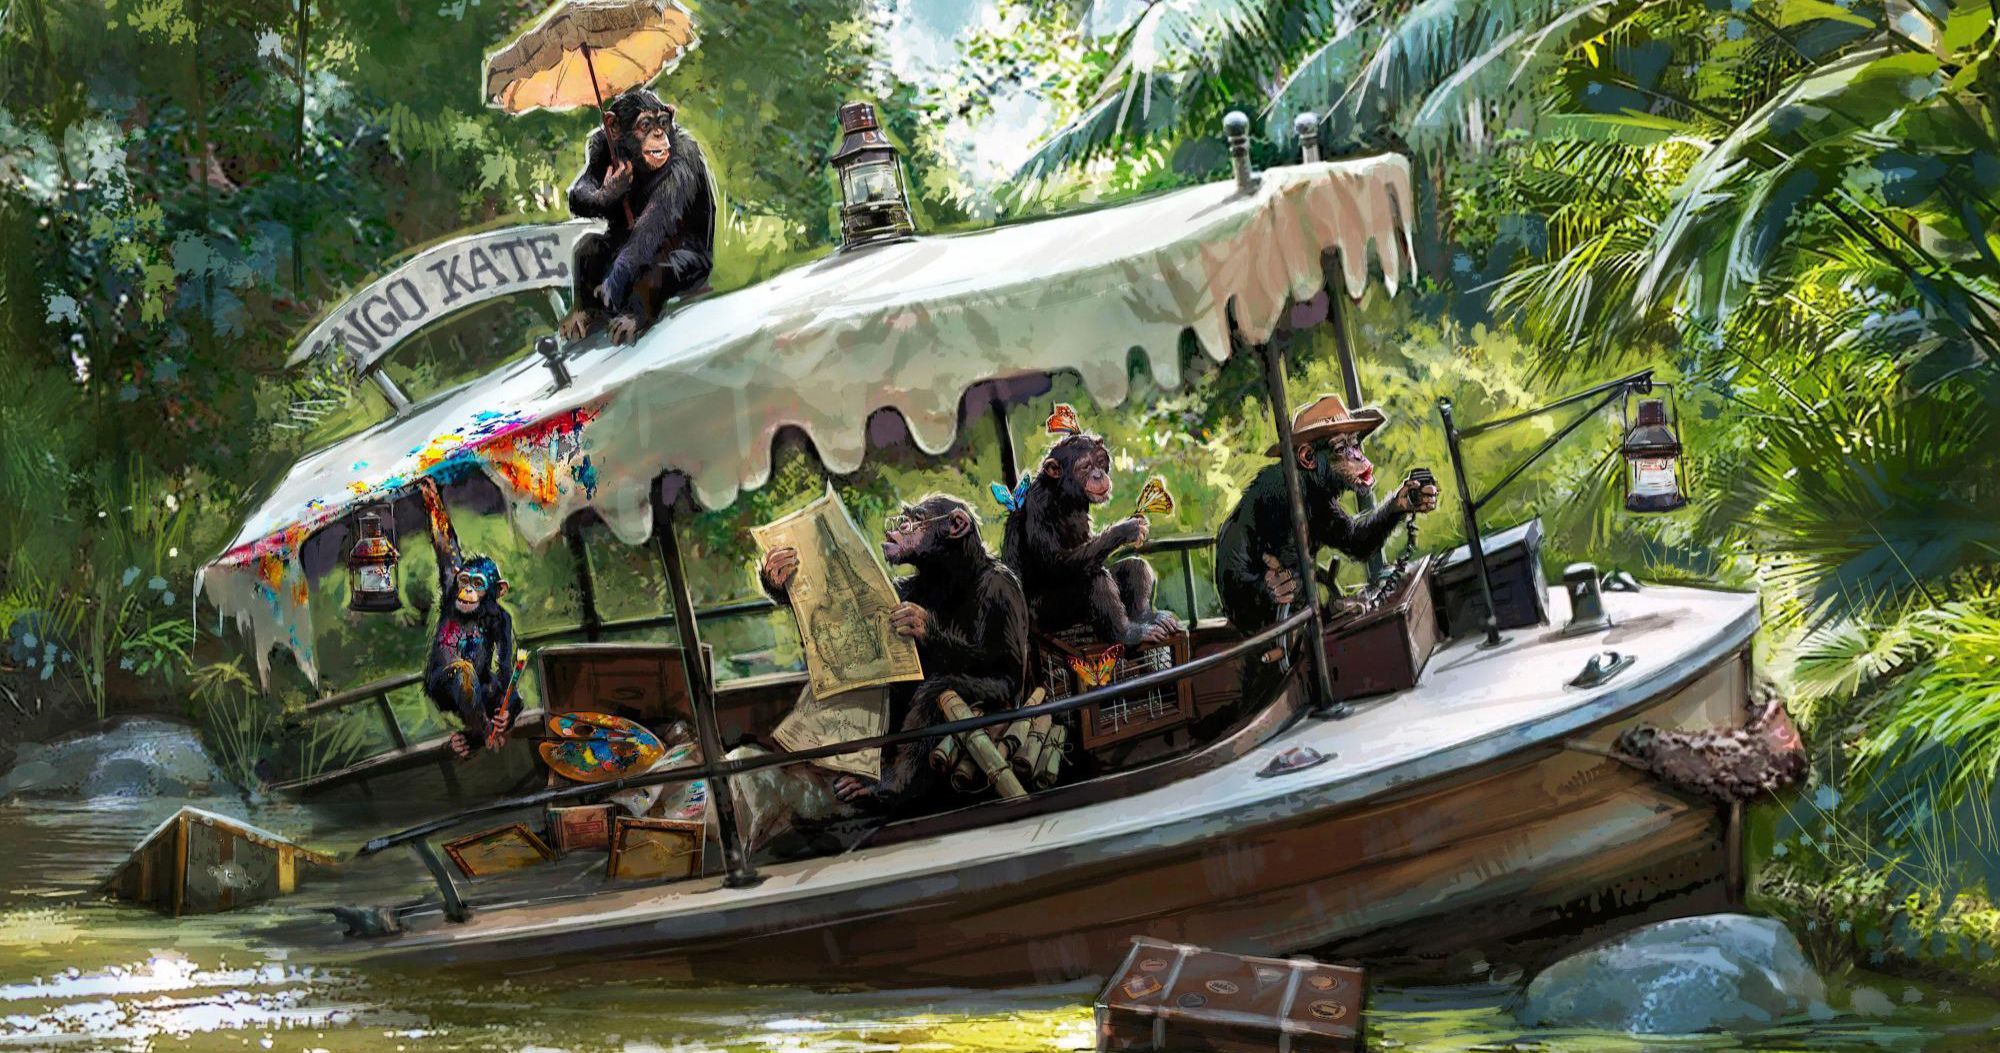 Disneyland's Jungle Cruise Ride Removes Insensitive Scenes Ahead of The Rock's Movie